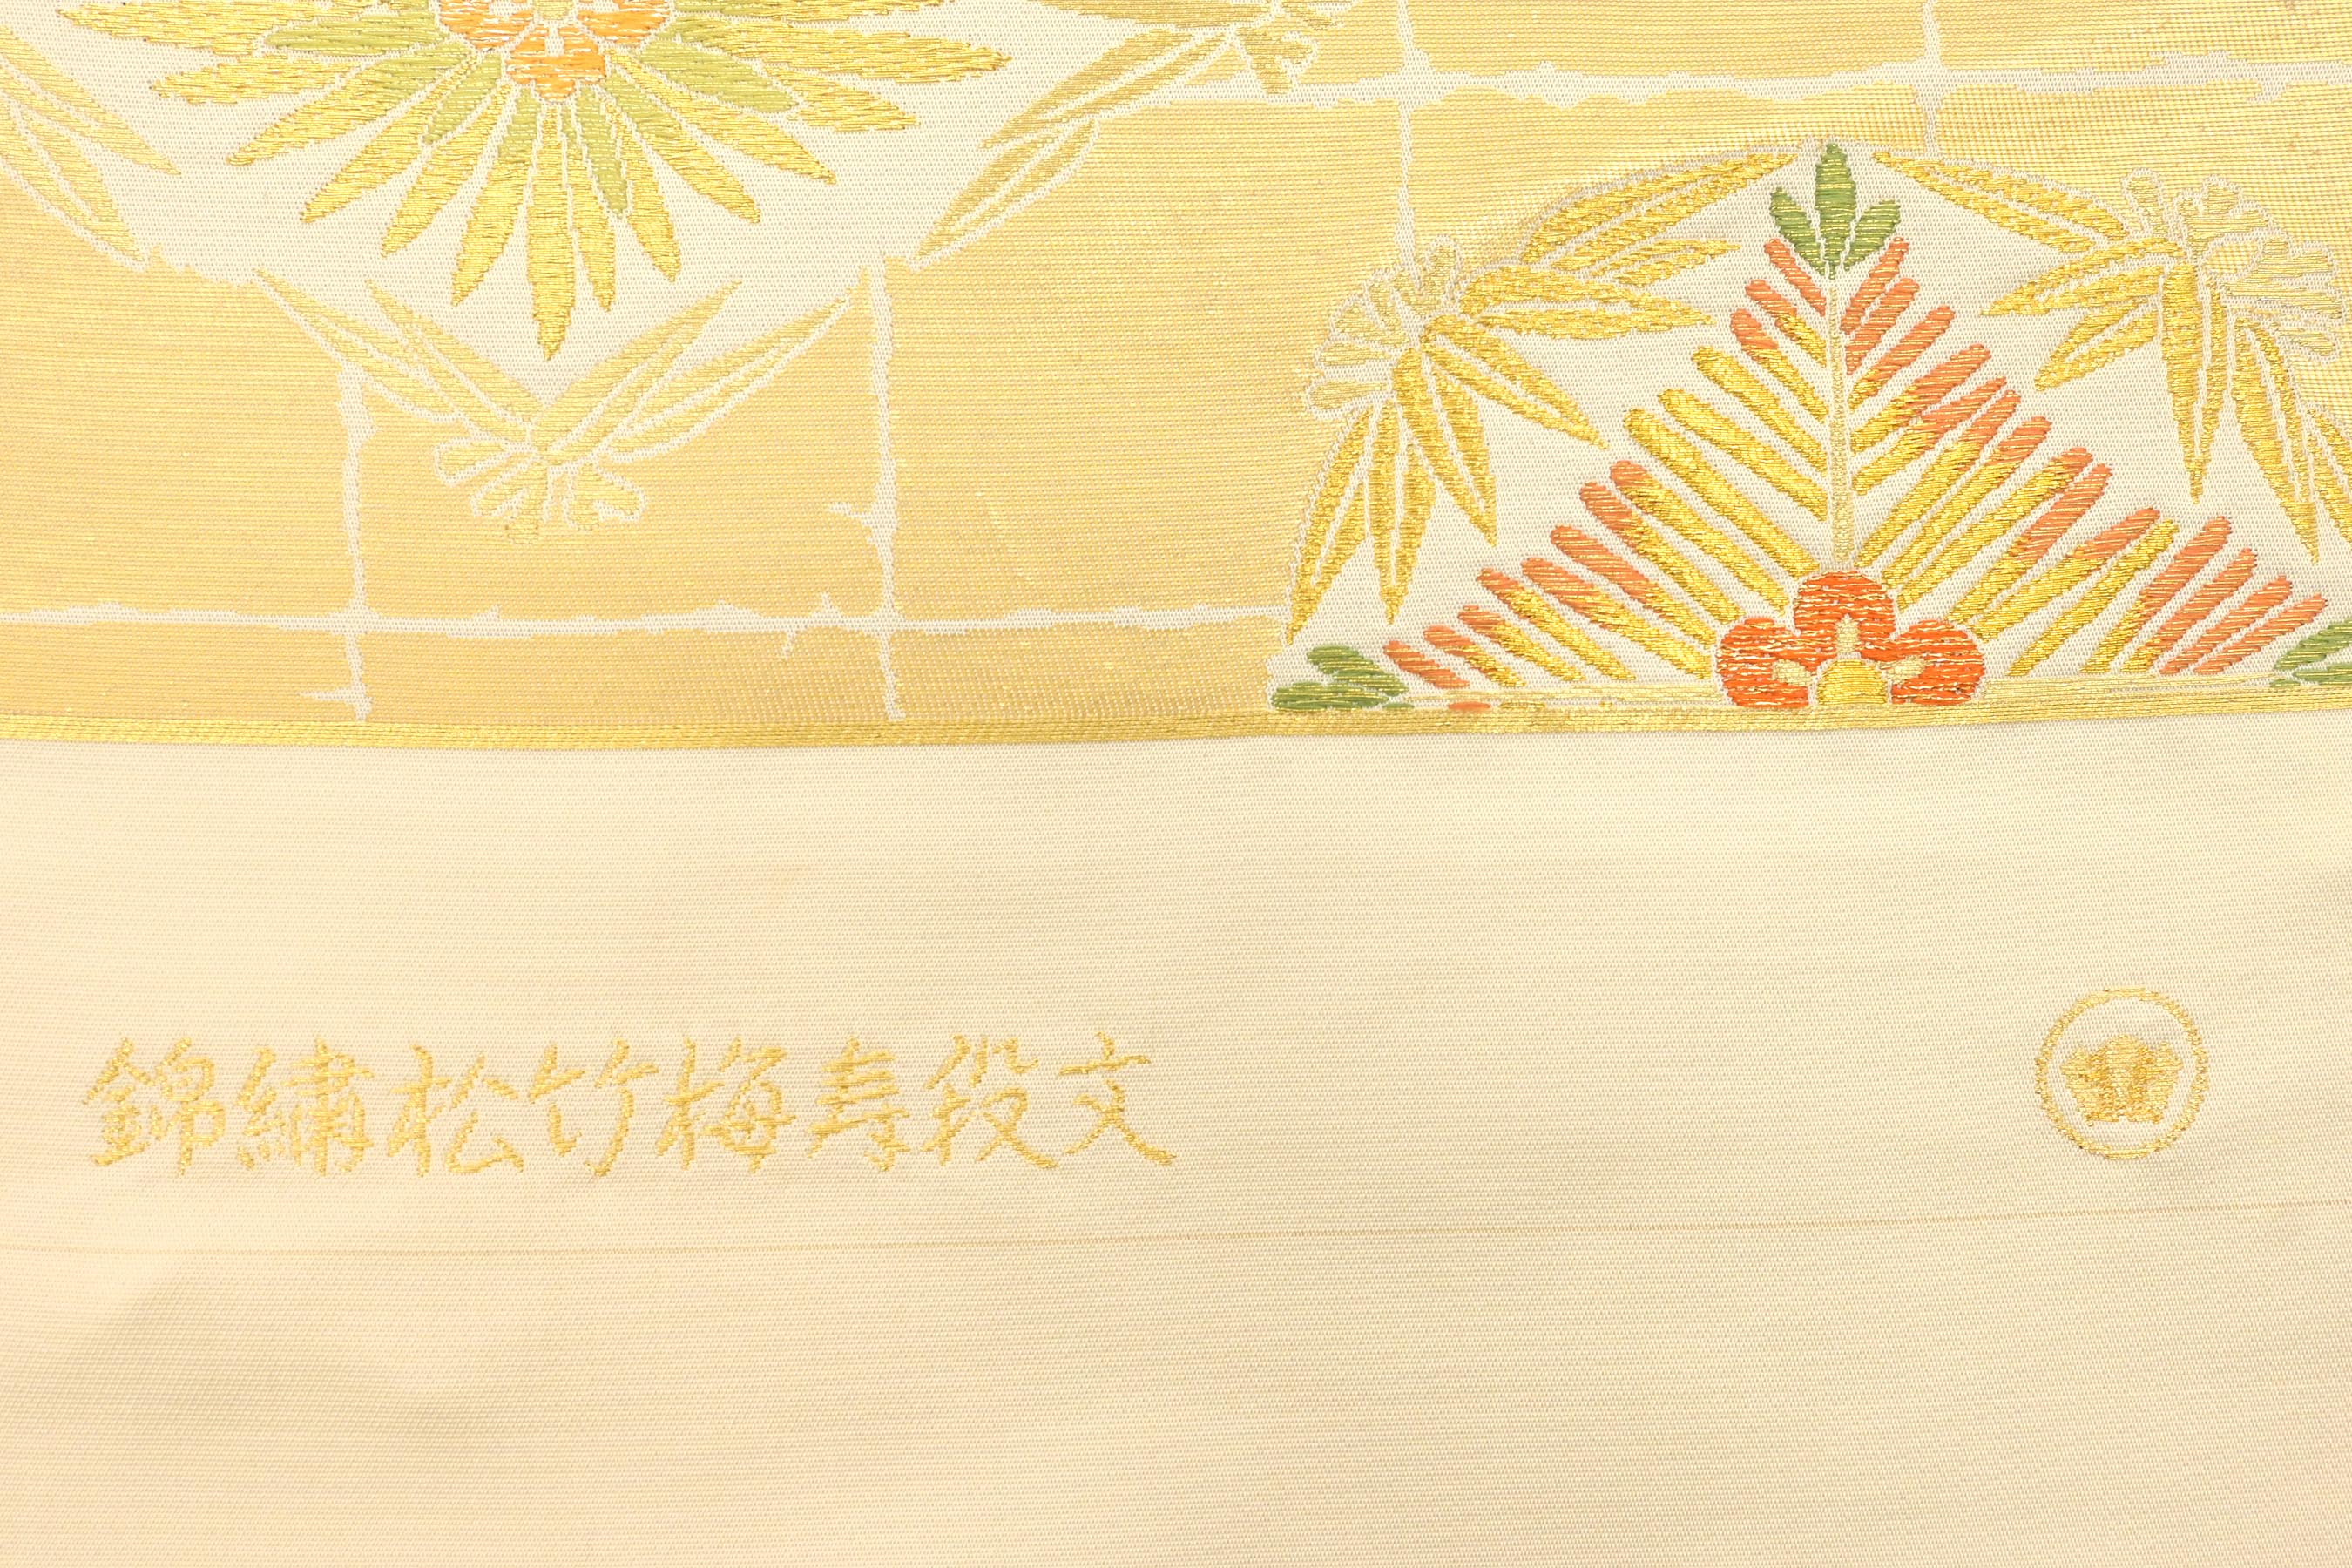 C717京都北尾織物匠豪華西陣正絹帯刺繍サンプル材料壁掛祝い熨斗純金箔帯素材/材料